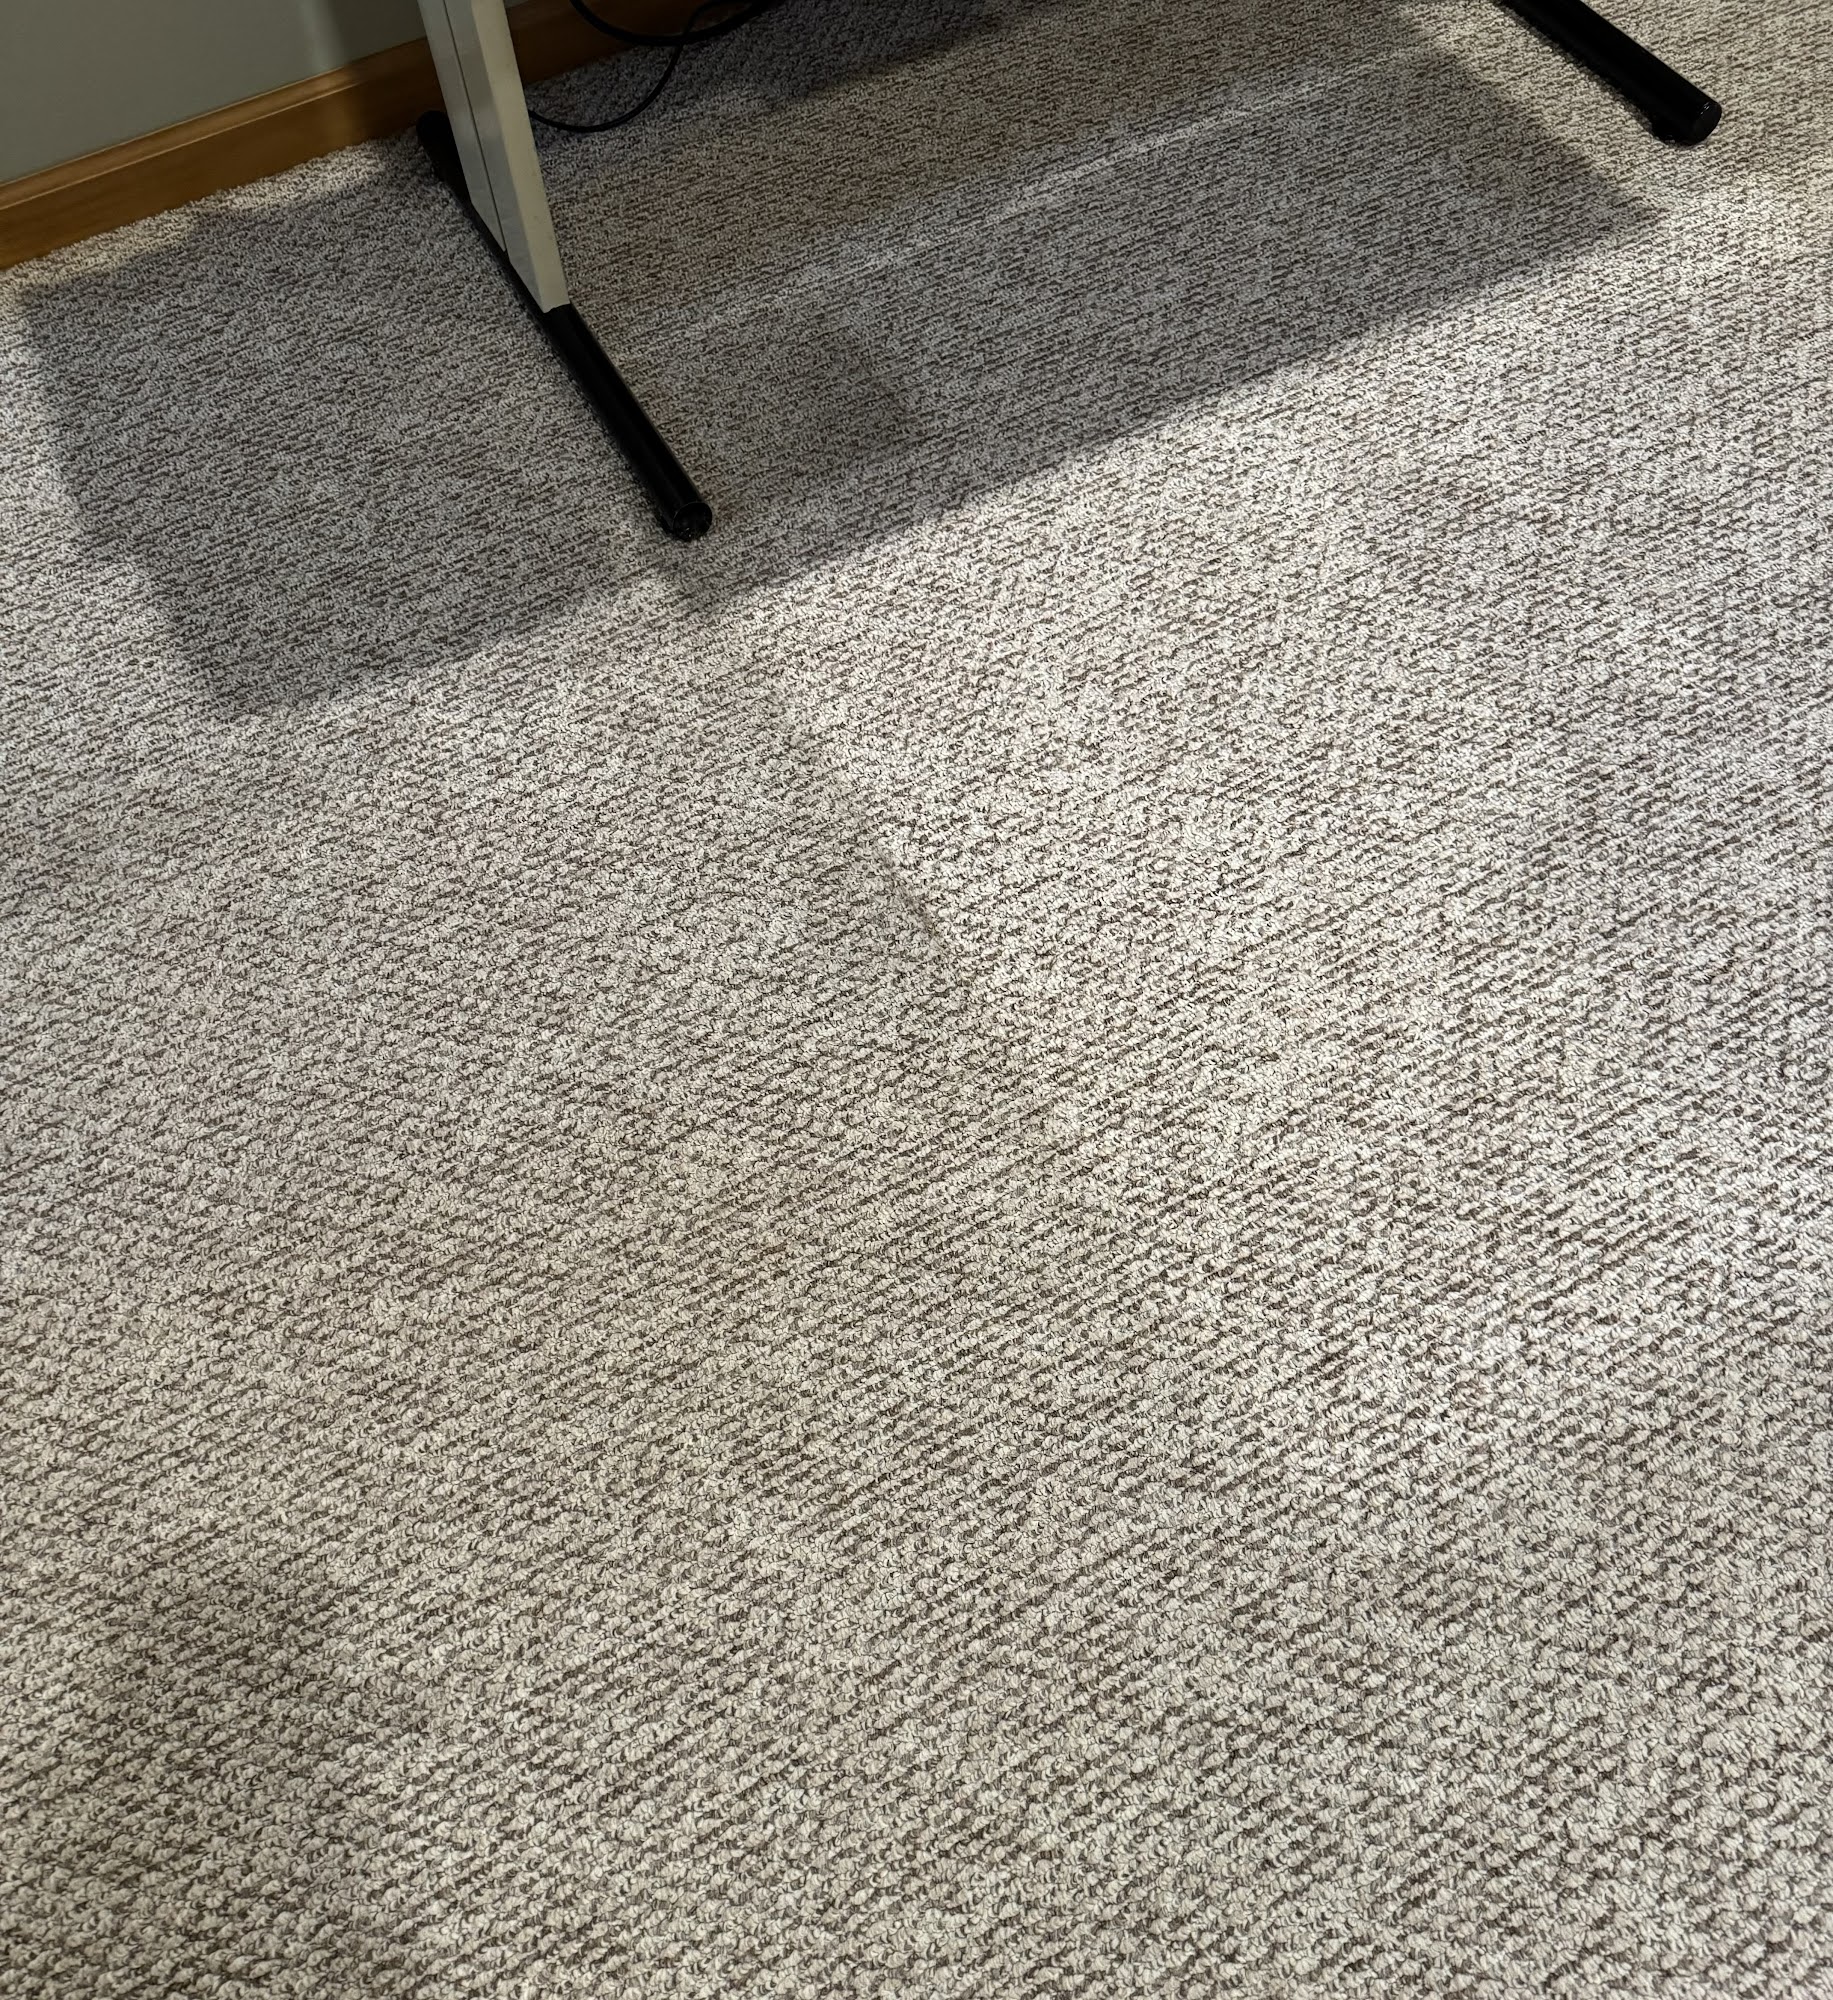 QuickDry Pro Carpet Cleaning, LLC